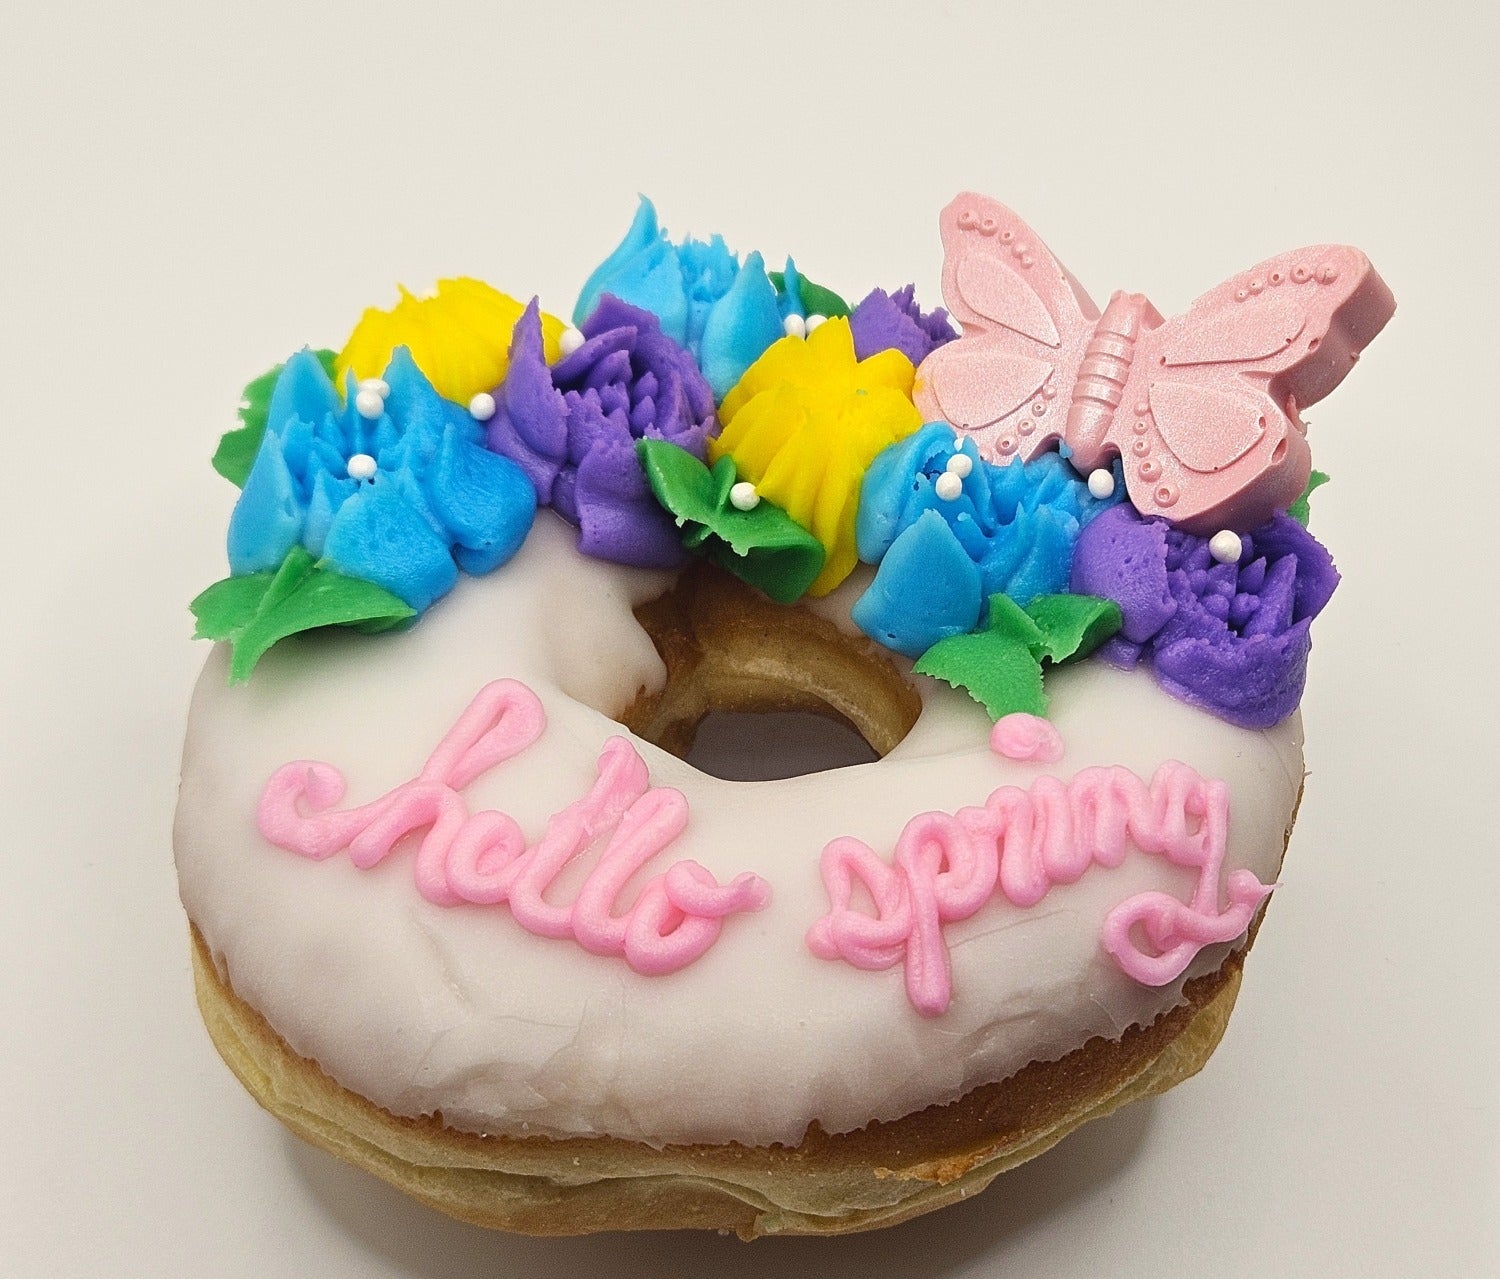 Shark Attack Donut! | Okaloosa Donuts - Artisan donuts and pastry 